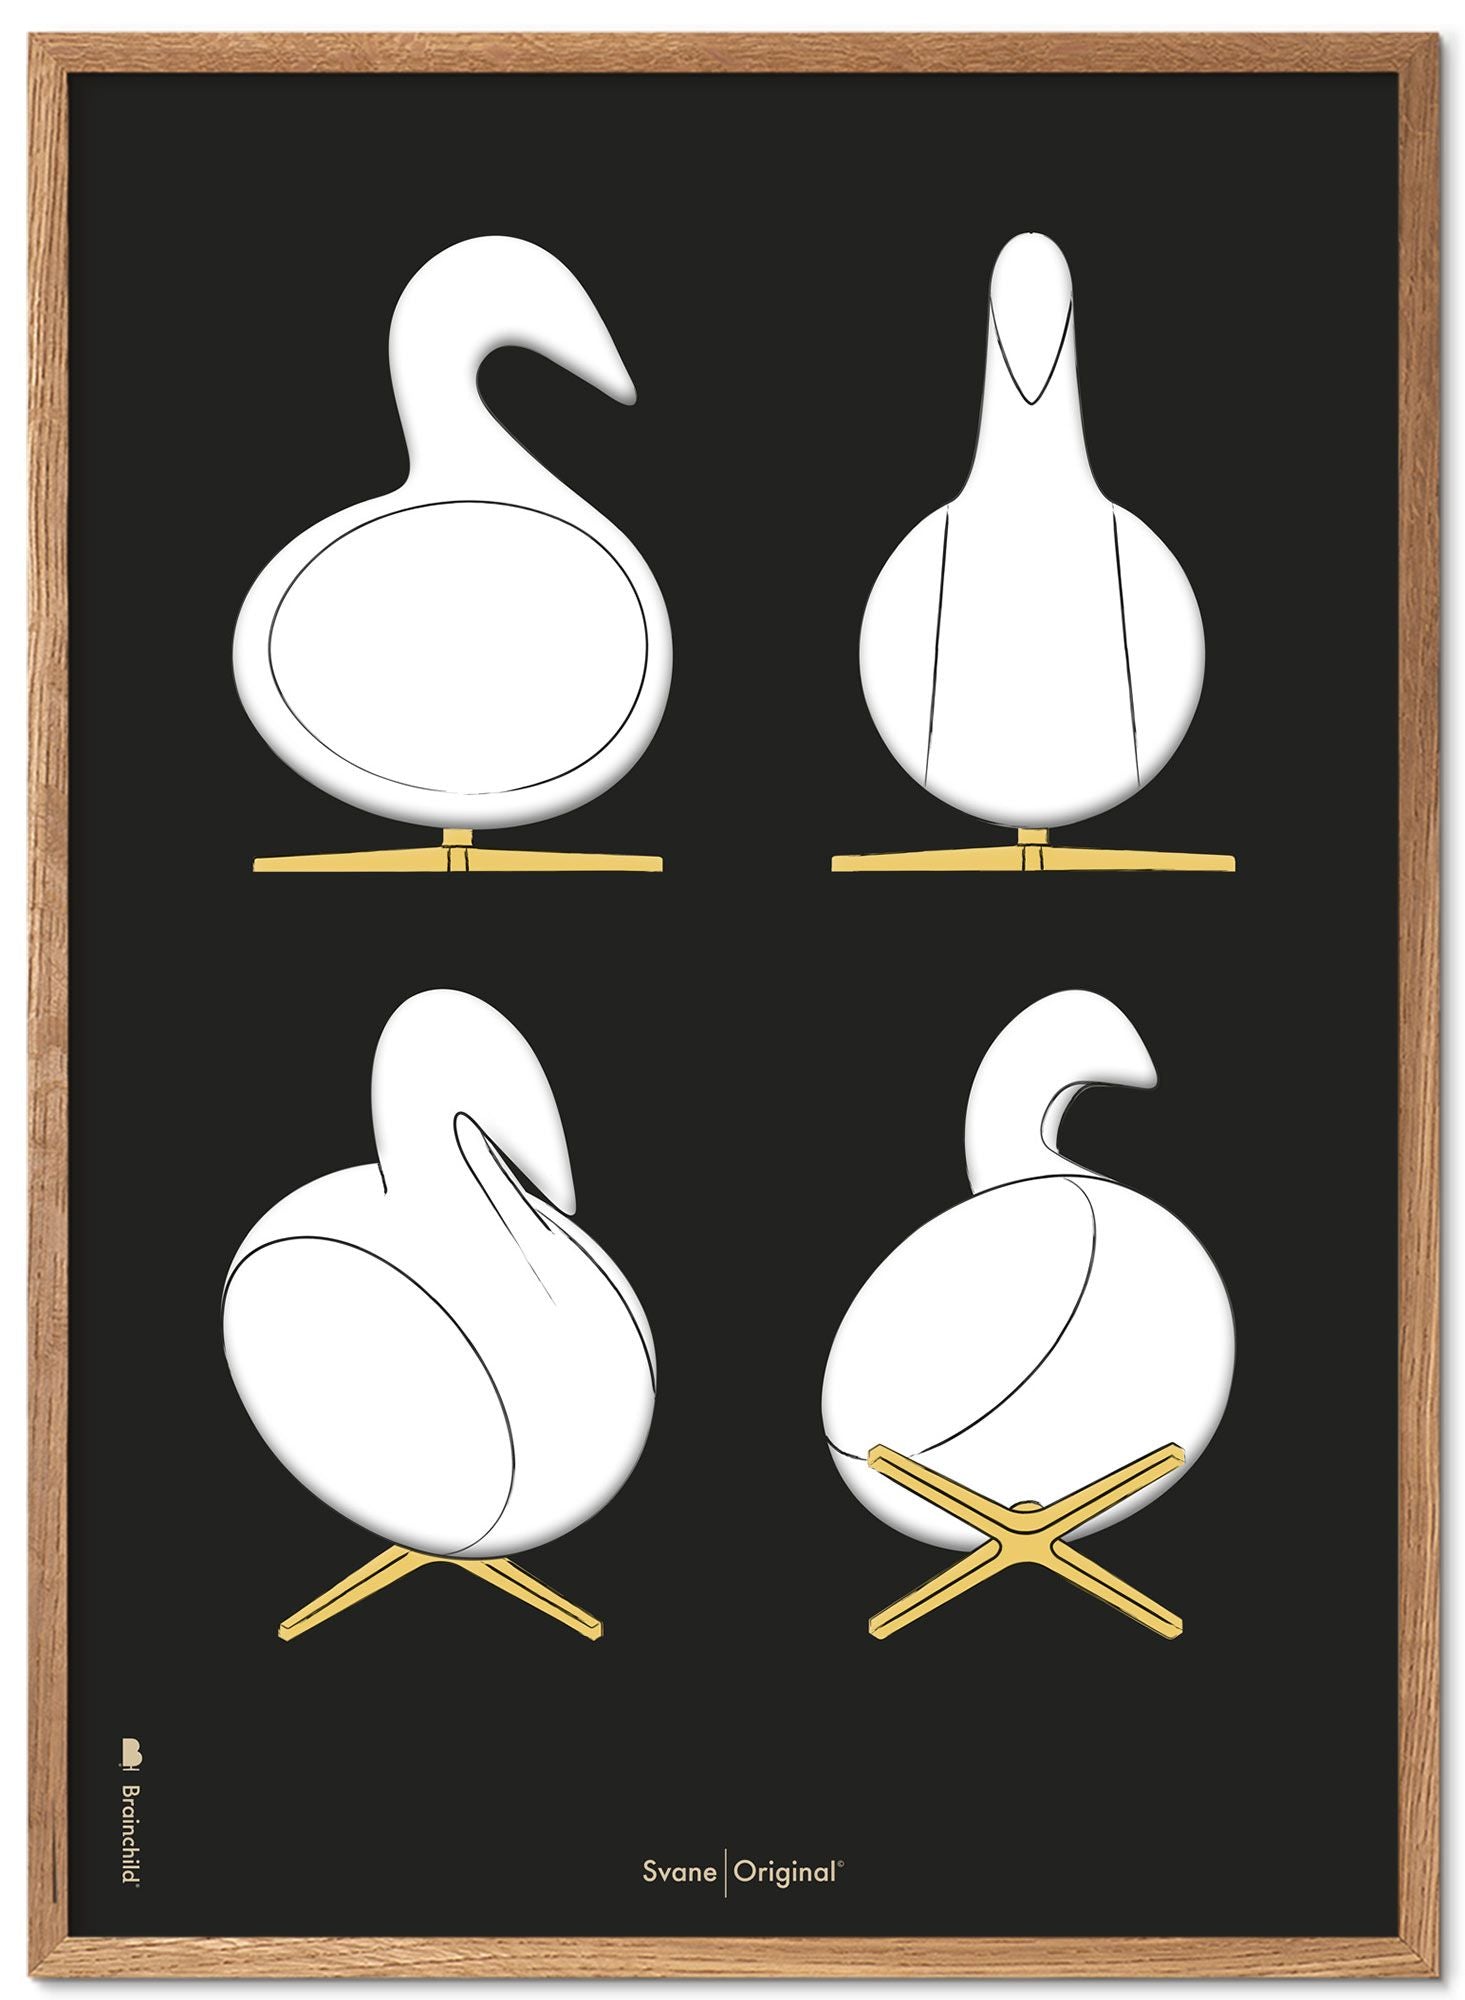 Brainchild Swan Design Sketches Poster Frame Made Of Light Wood A5, Black Background